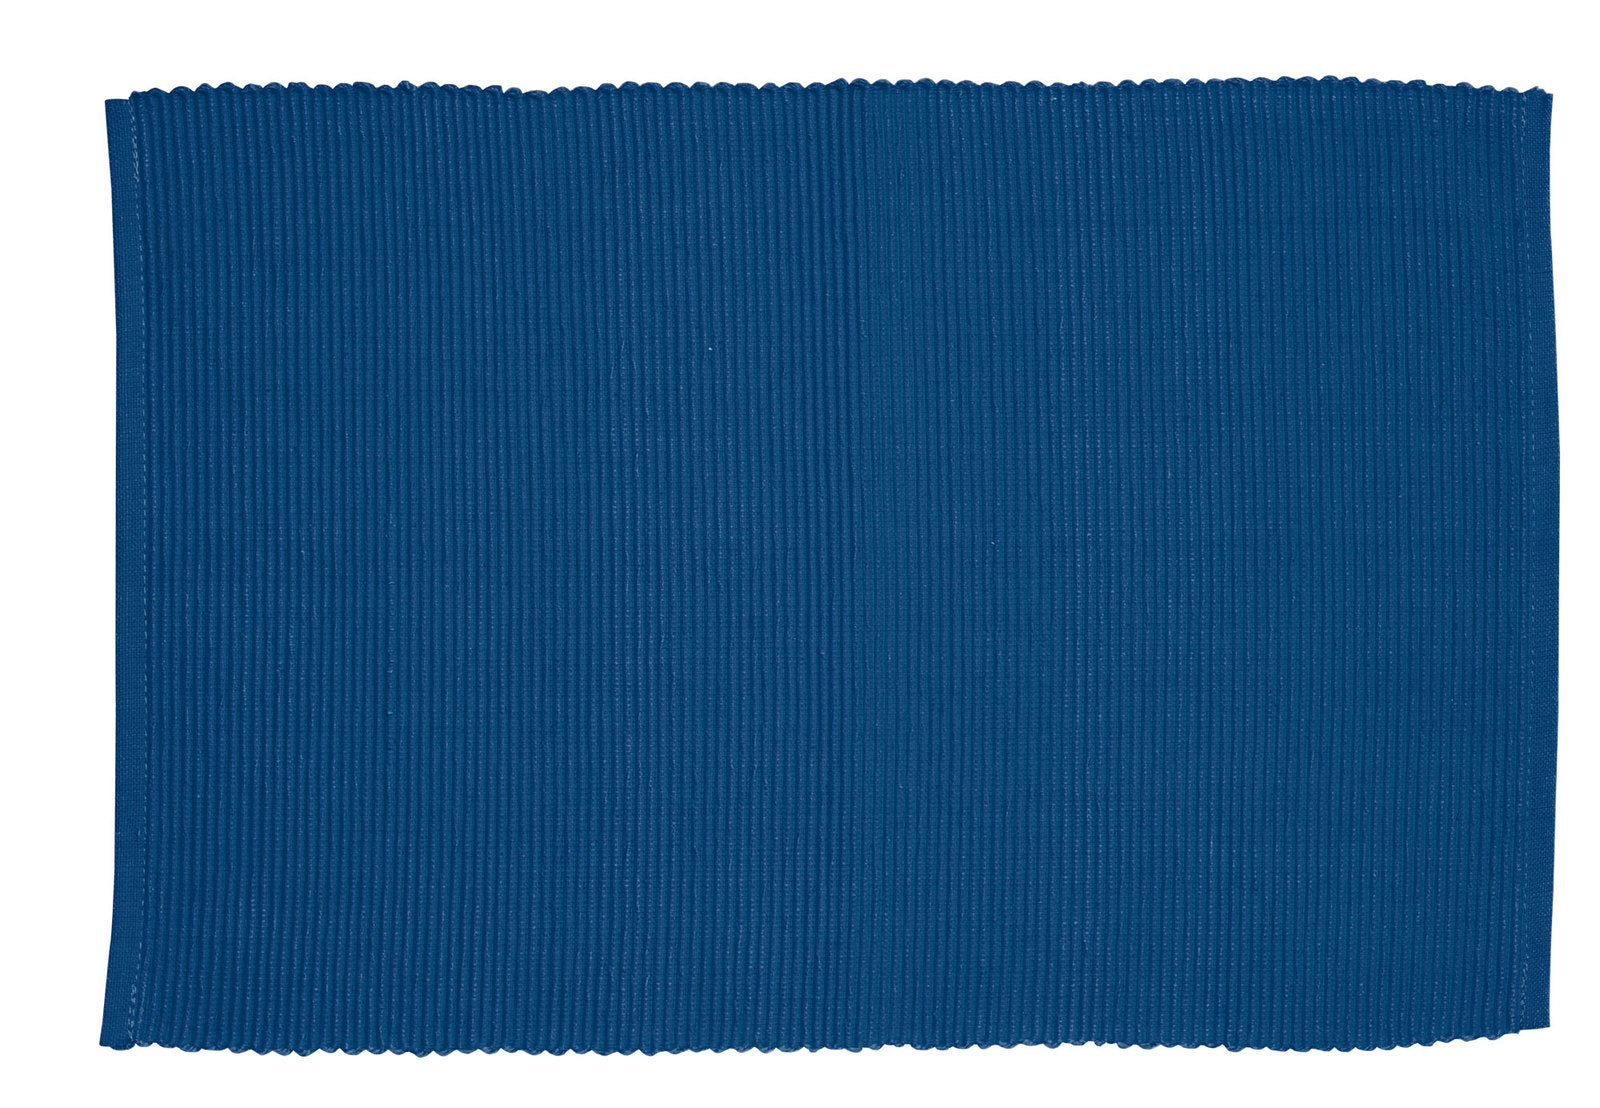 Lollipop Ribbed Placemat - 33 cm x 48 cm (set of 6) in Cobalt Blue